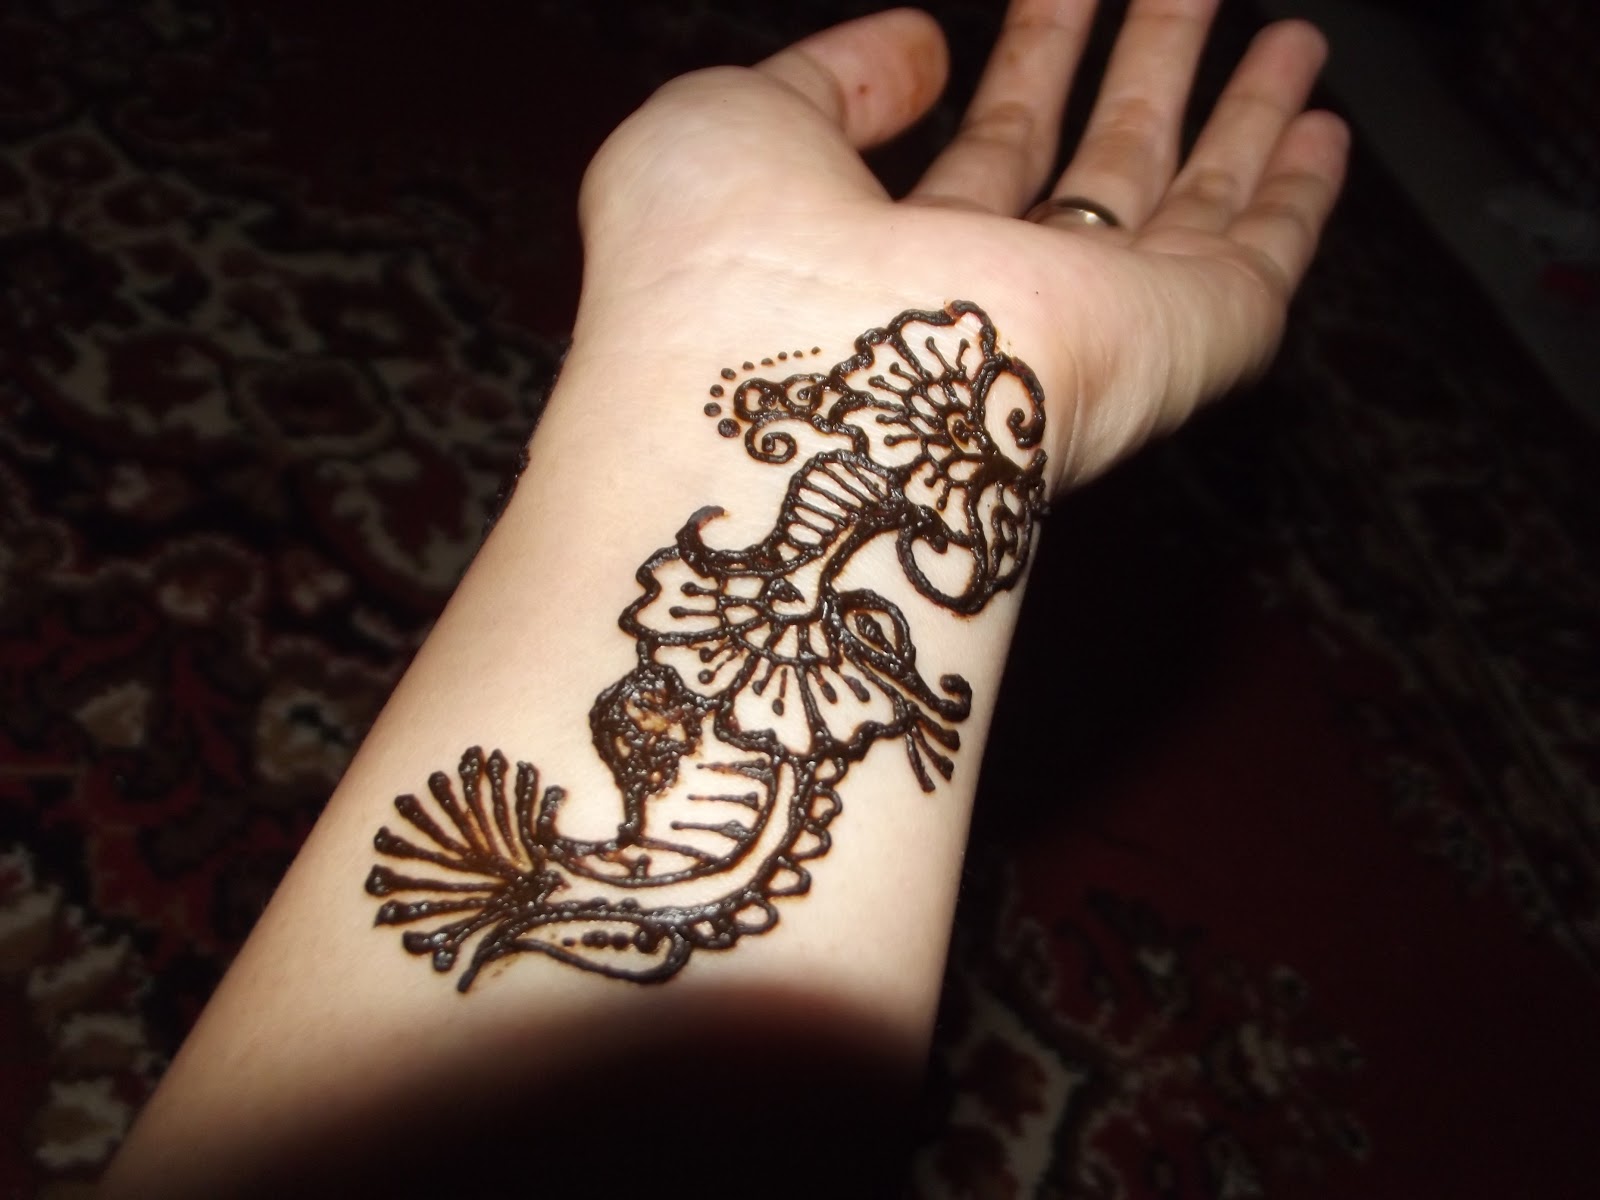  gambar hena tangan henna art simple di telapak tangan 